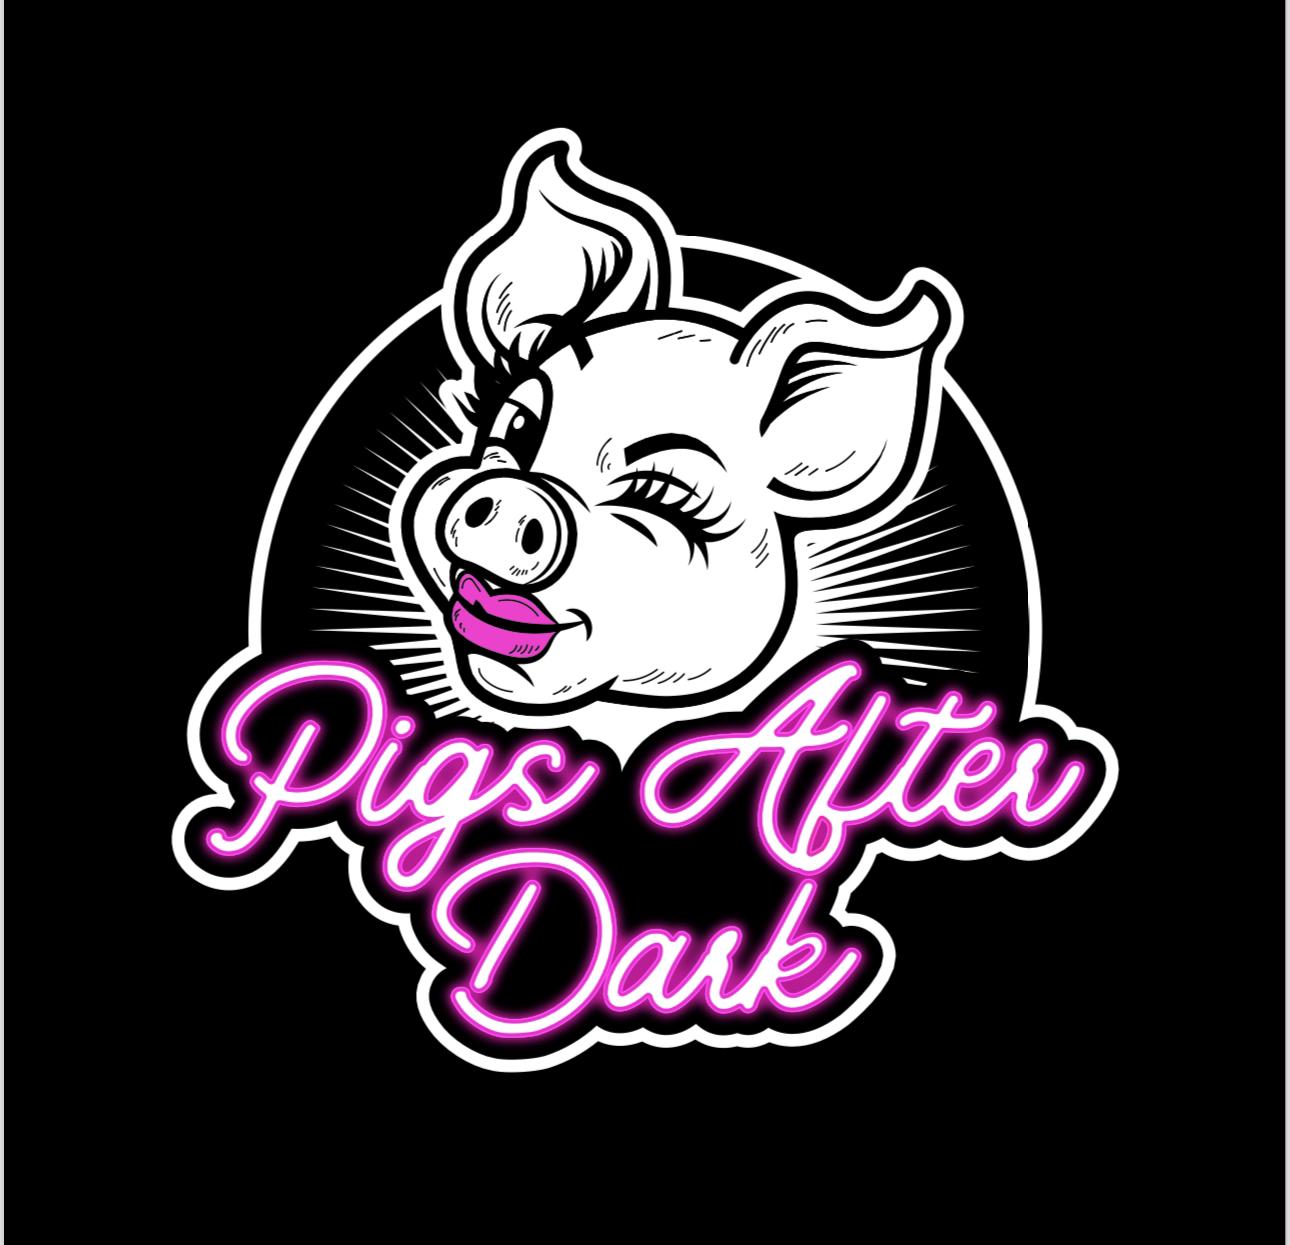 Piggies After Dark : Provocative